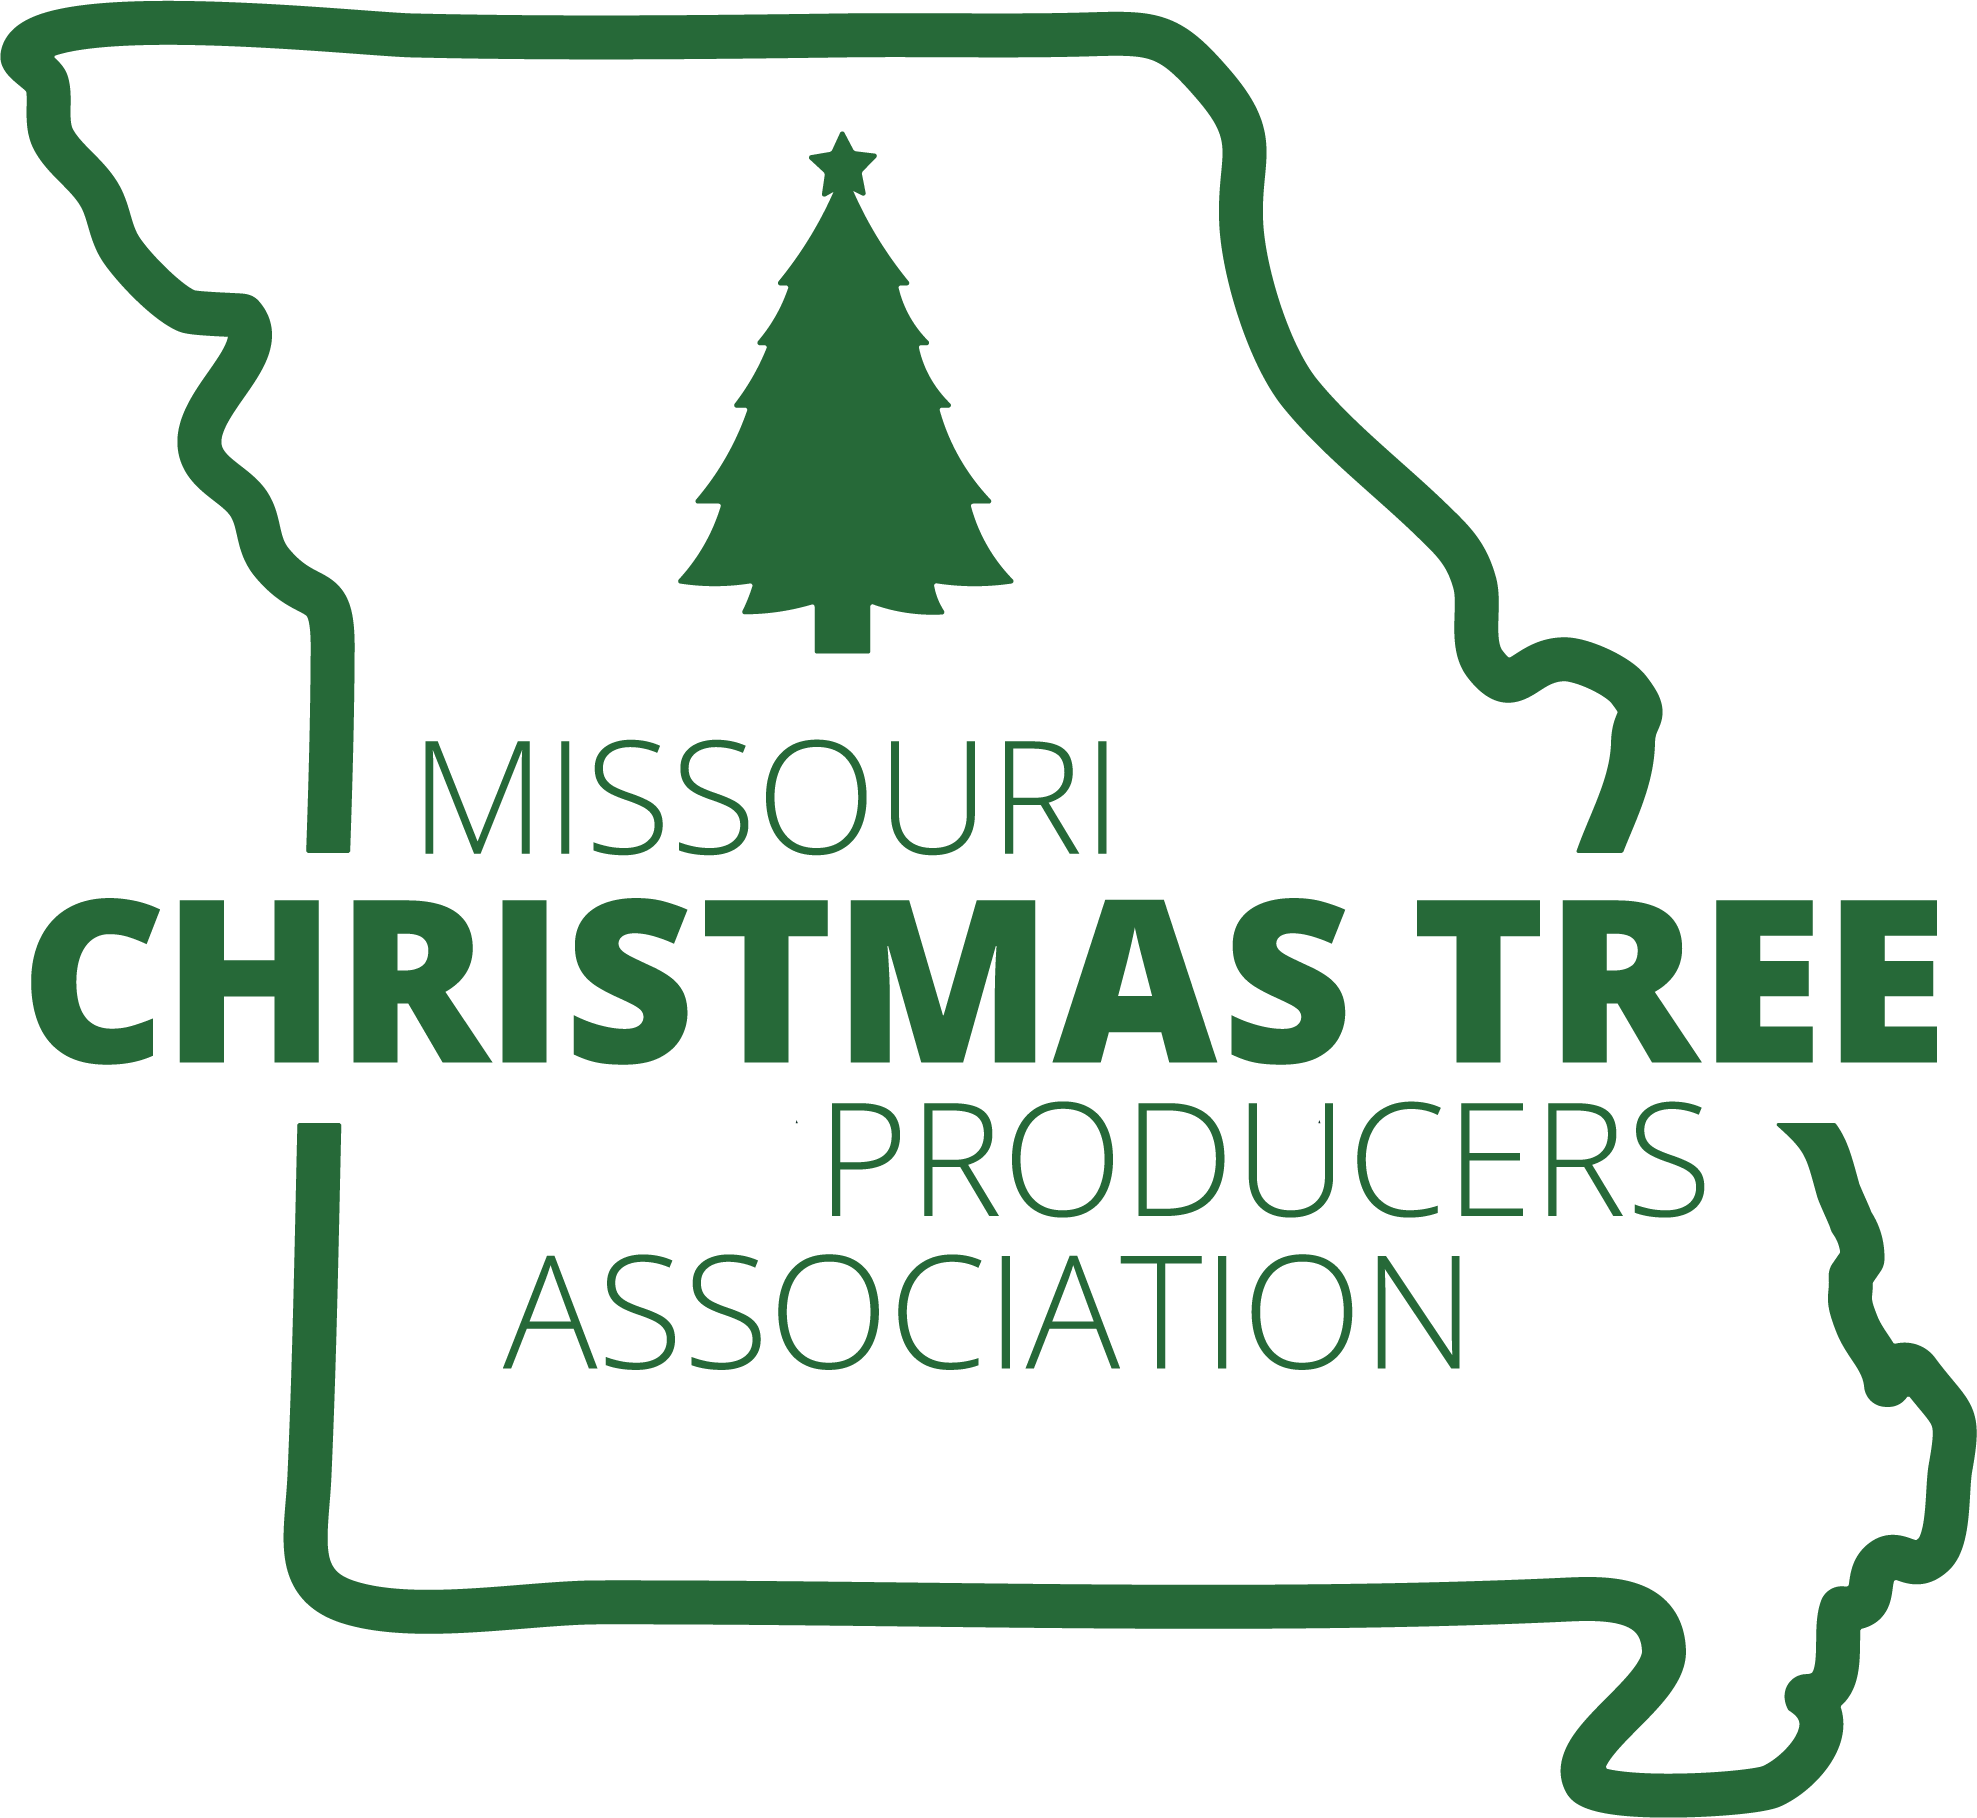 Missouri Christmas Tree Producers Association